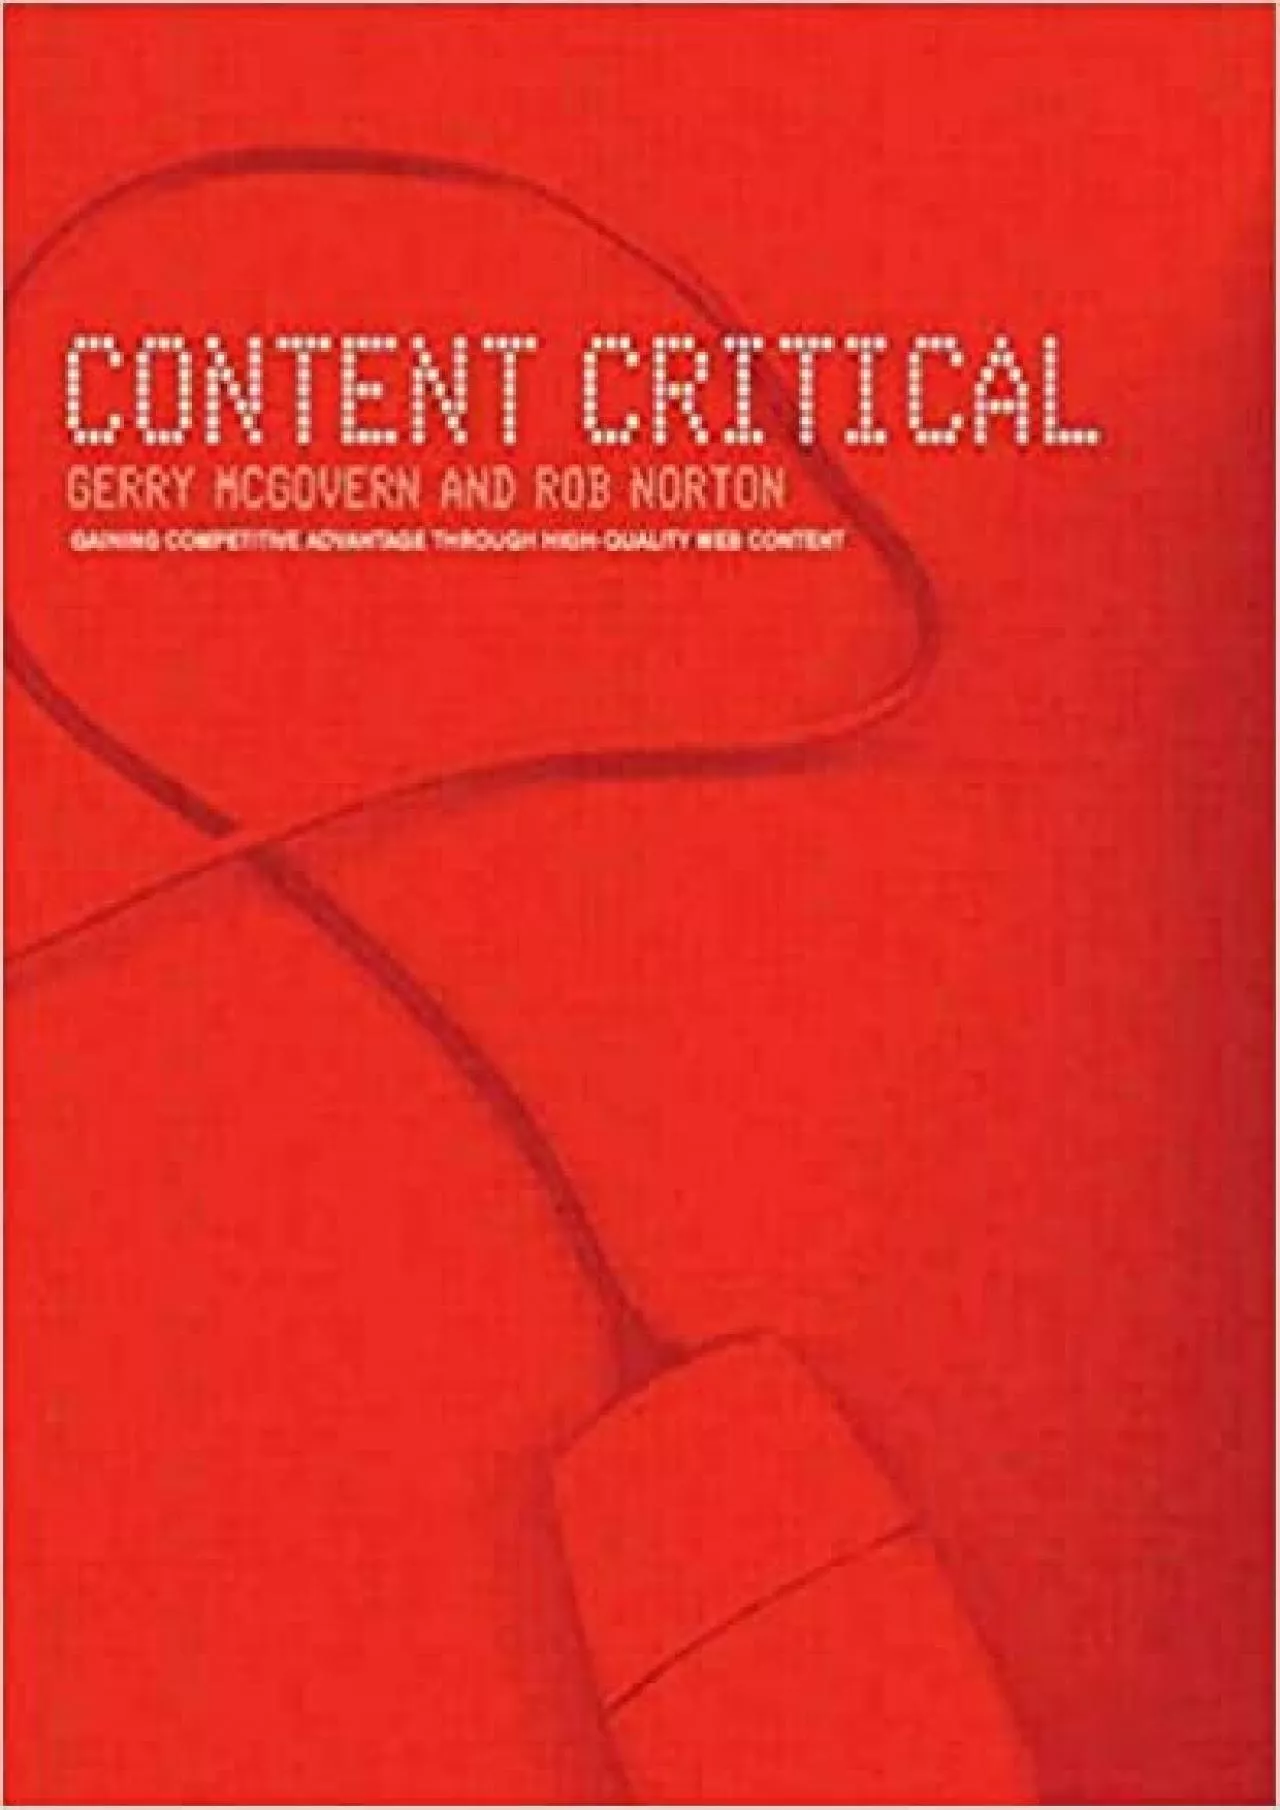 Content Critical Gaining Competitive Advantage Through High-Quality Web Content